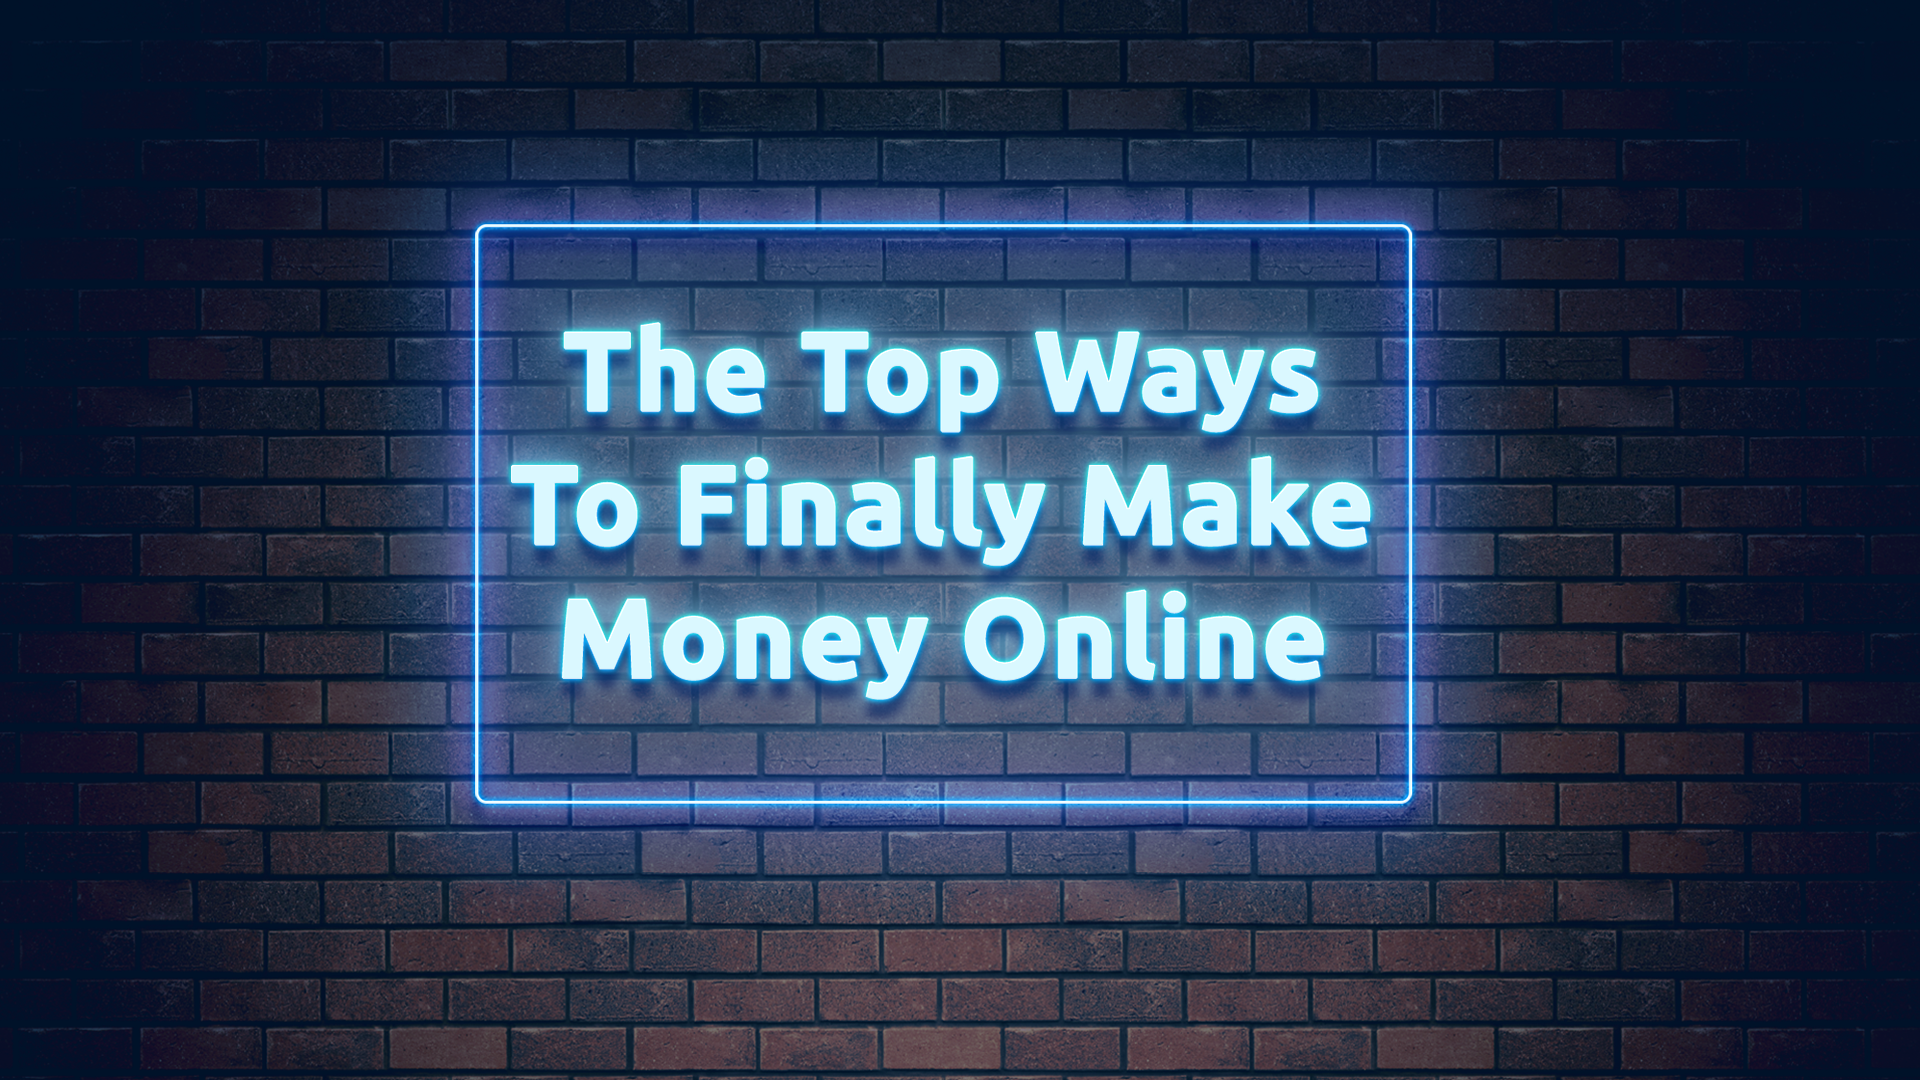 Free Video - Top Ways To Make Money Online